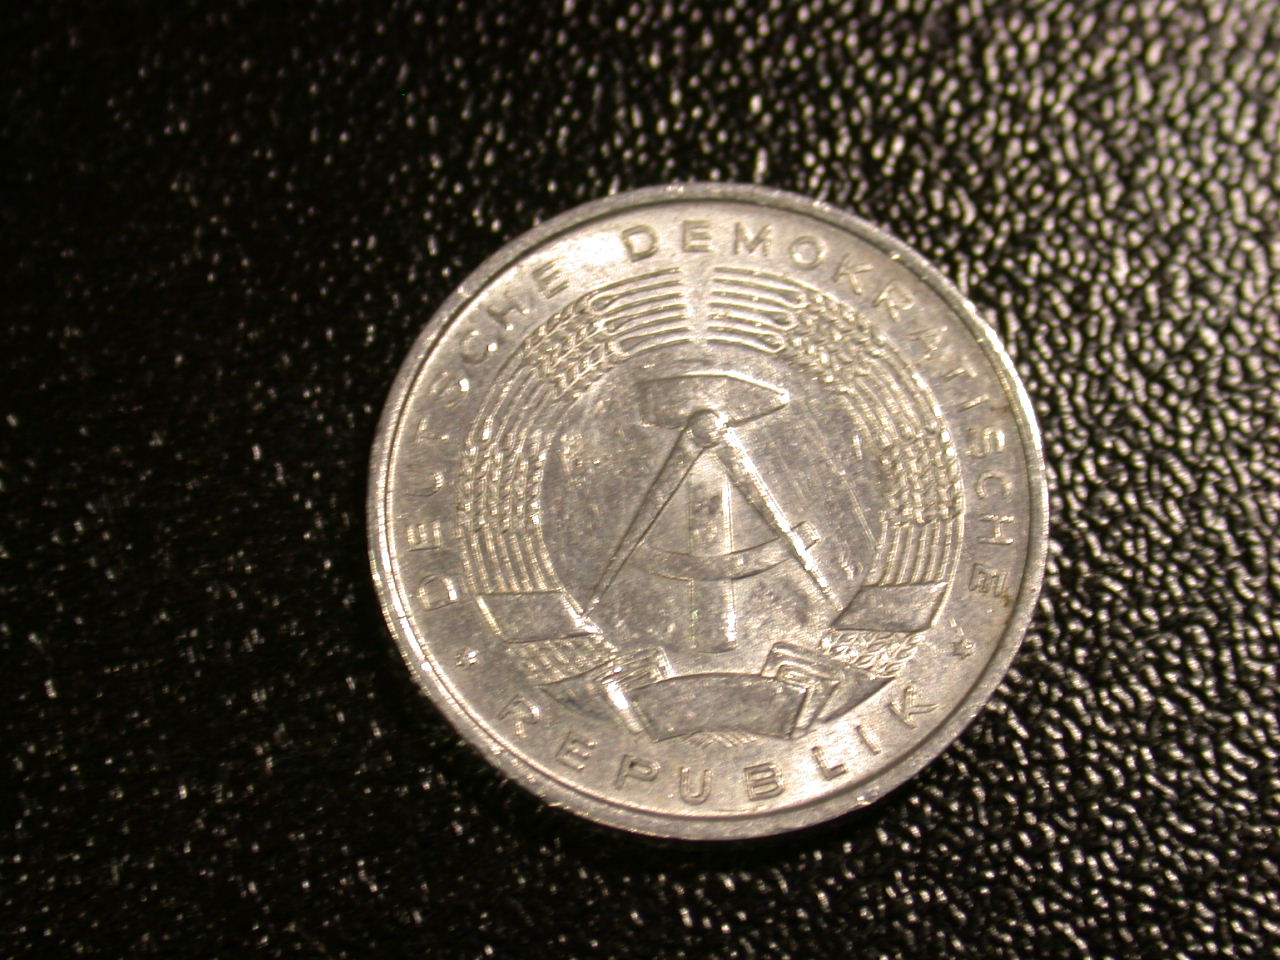  12045  DDR   1 Pfennig  1964  in vz-st   